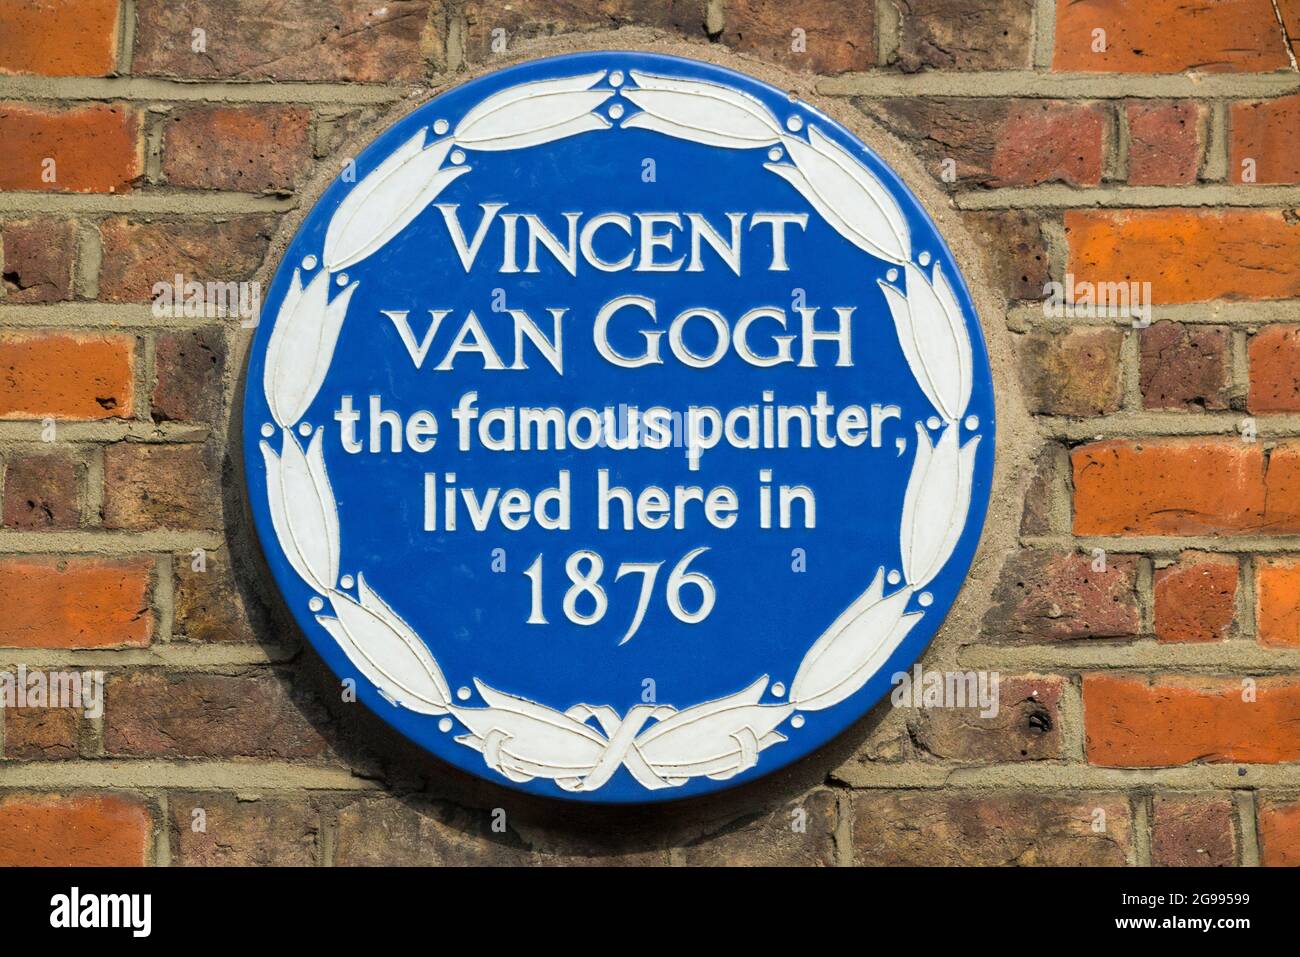 Targa blu dedicata a Vincent Van Gogh che visse in questa casa su Twickenham Road, Isleworth, Middlesex, West London, nel 1876. (127) Foto Stock